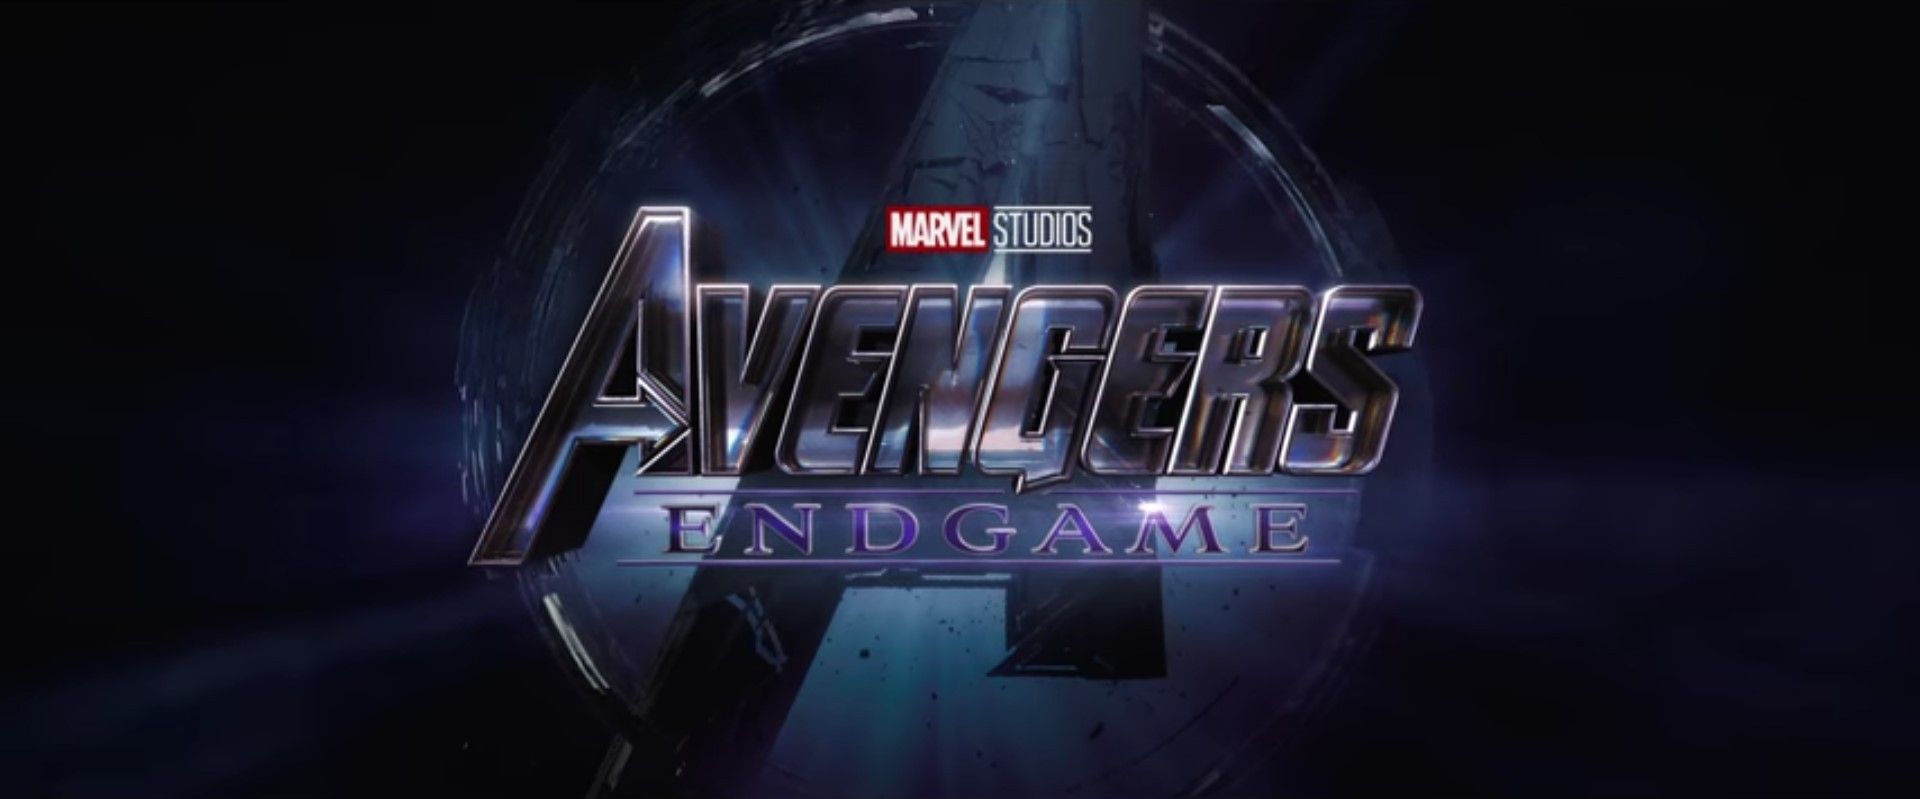 WATCH: Avengers 'Endgame' official trailer reveals 